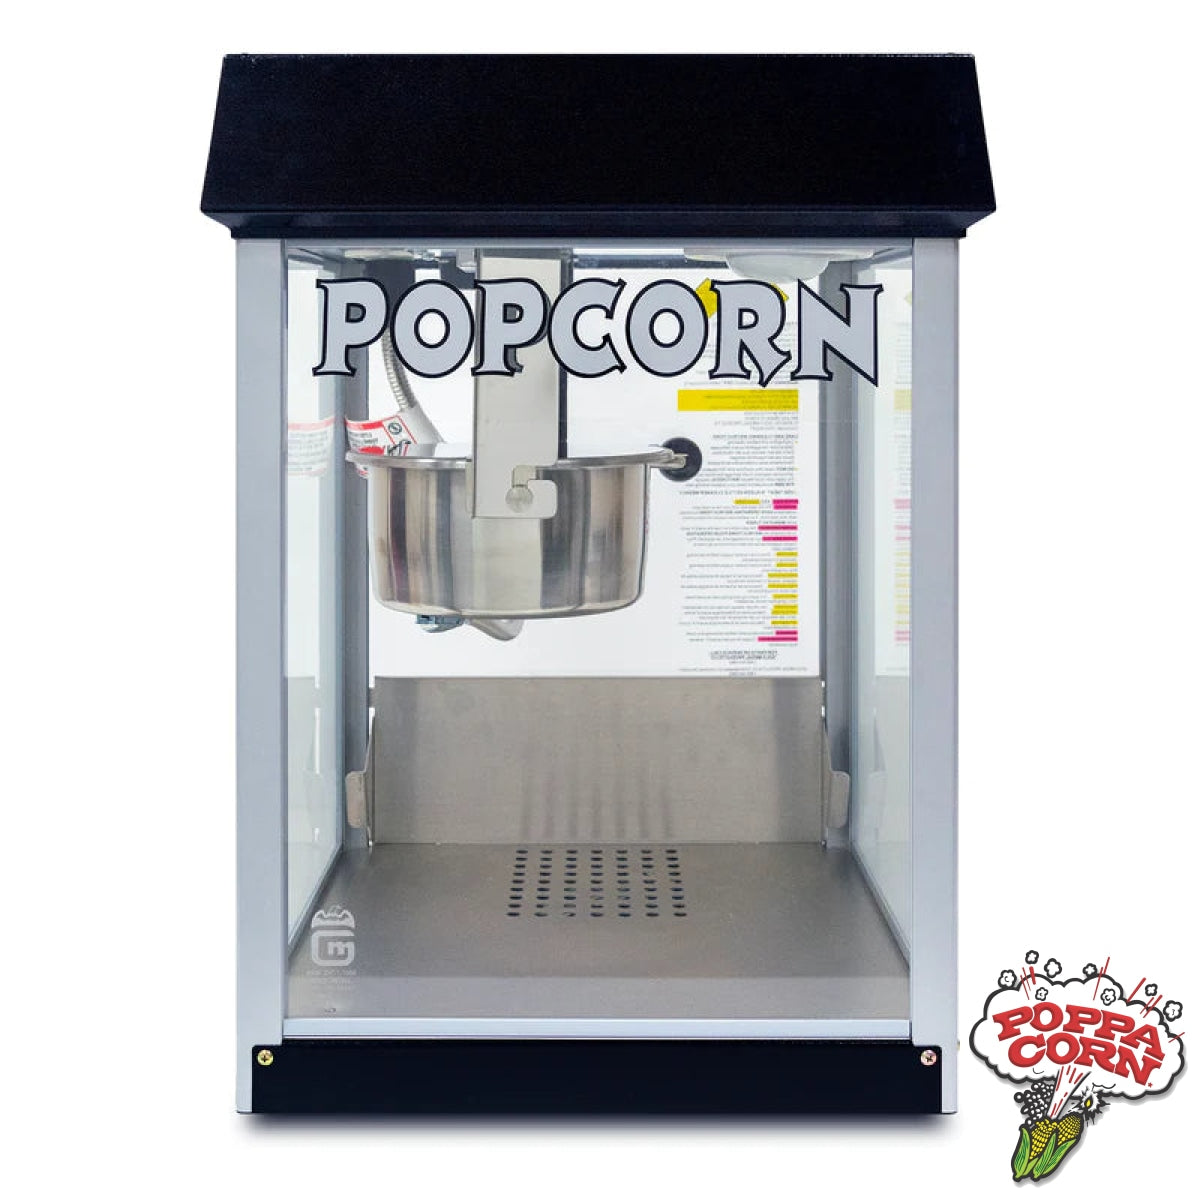 Black Fun Pop 4-oz. Popcorn Machine - GM2404MD - Poppa Corn Corp